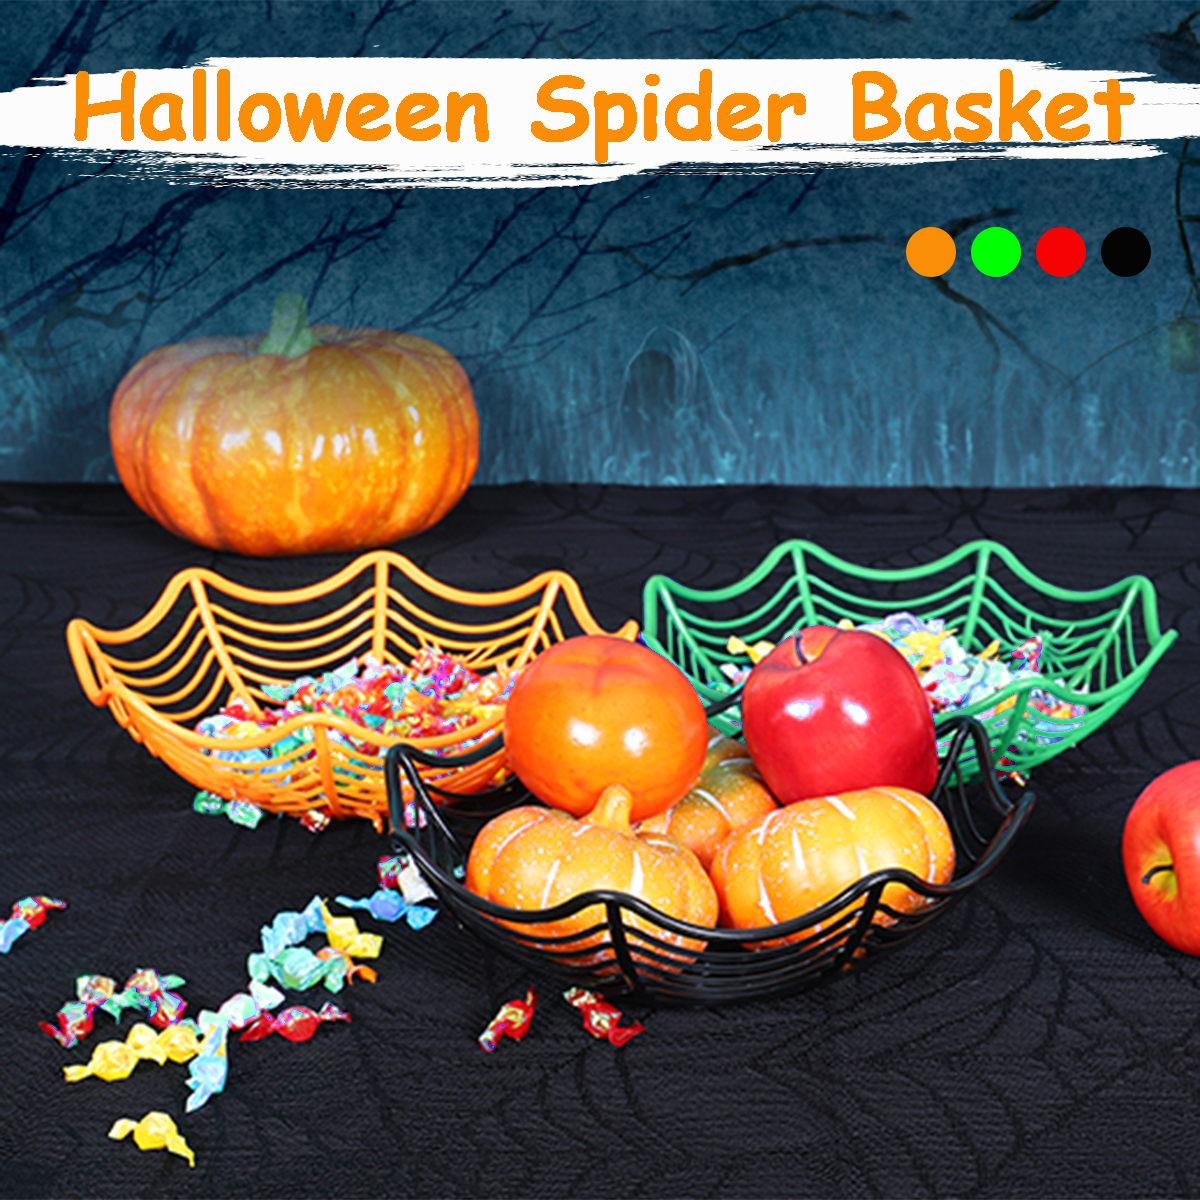 Halloween-Candy-Basket-Bowls-Spider-Web-Plastic-Bowls-for-Kids-Trick-or-Treat-Candy-Halloween-Basket-1751560-2